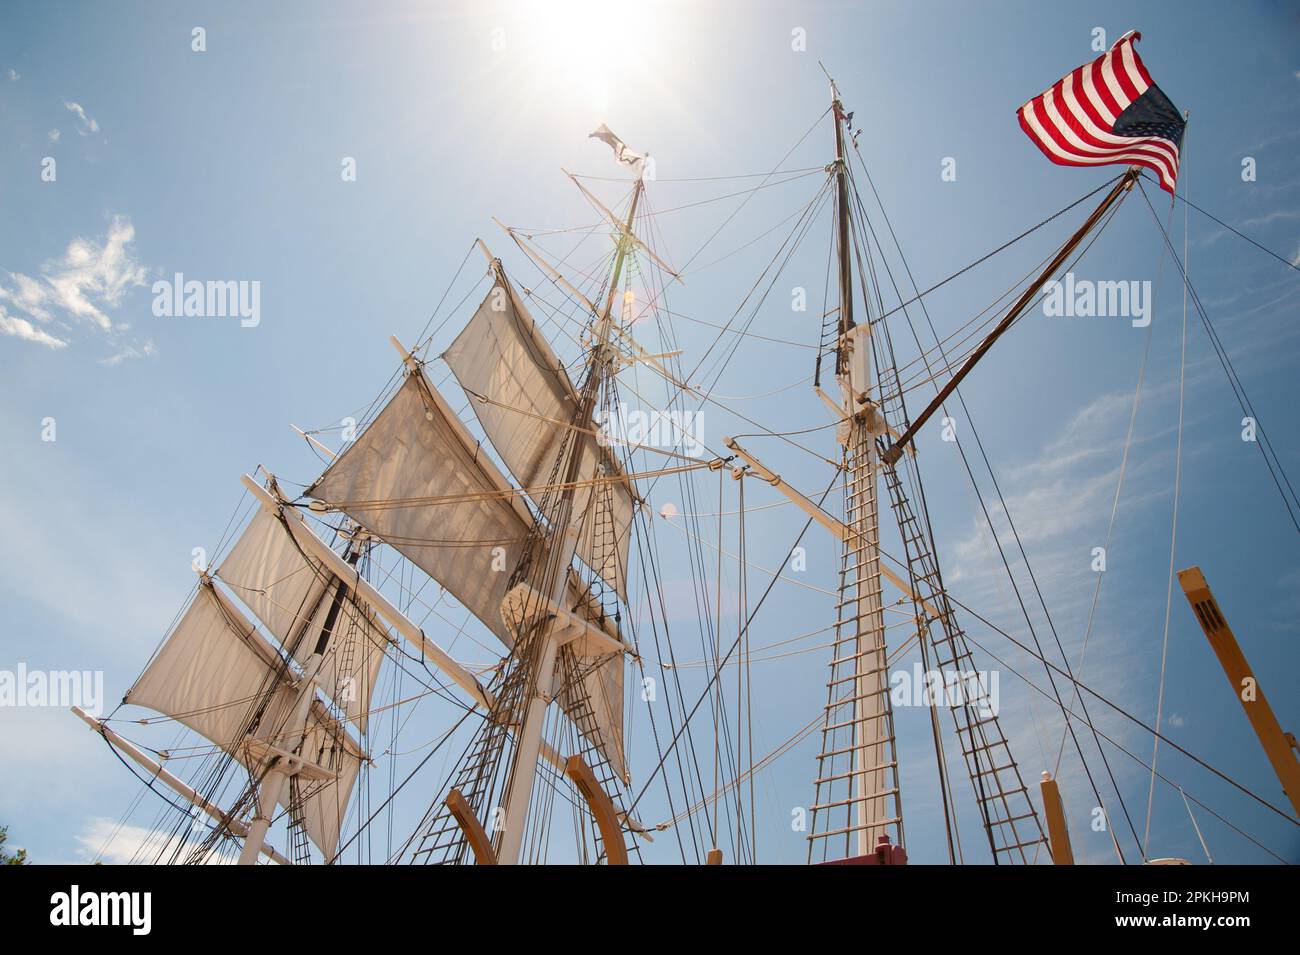 Backlit high-masted sails on tall sailing ship. Stock Photo